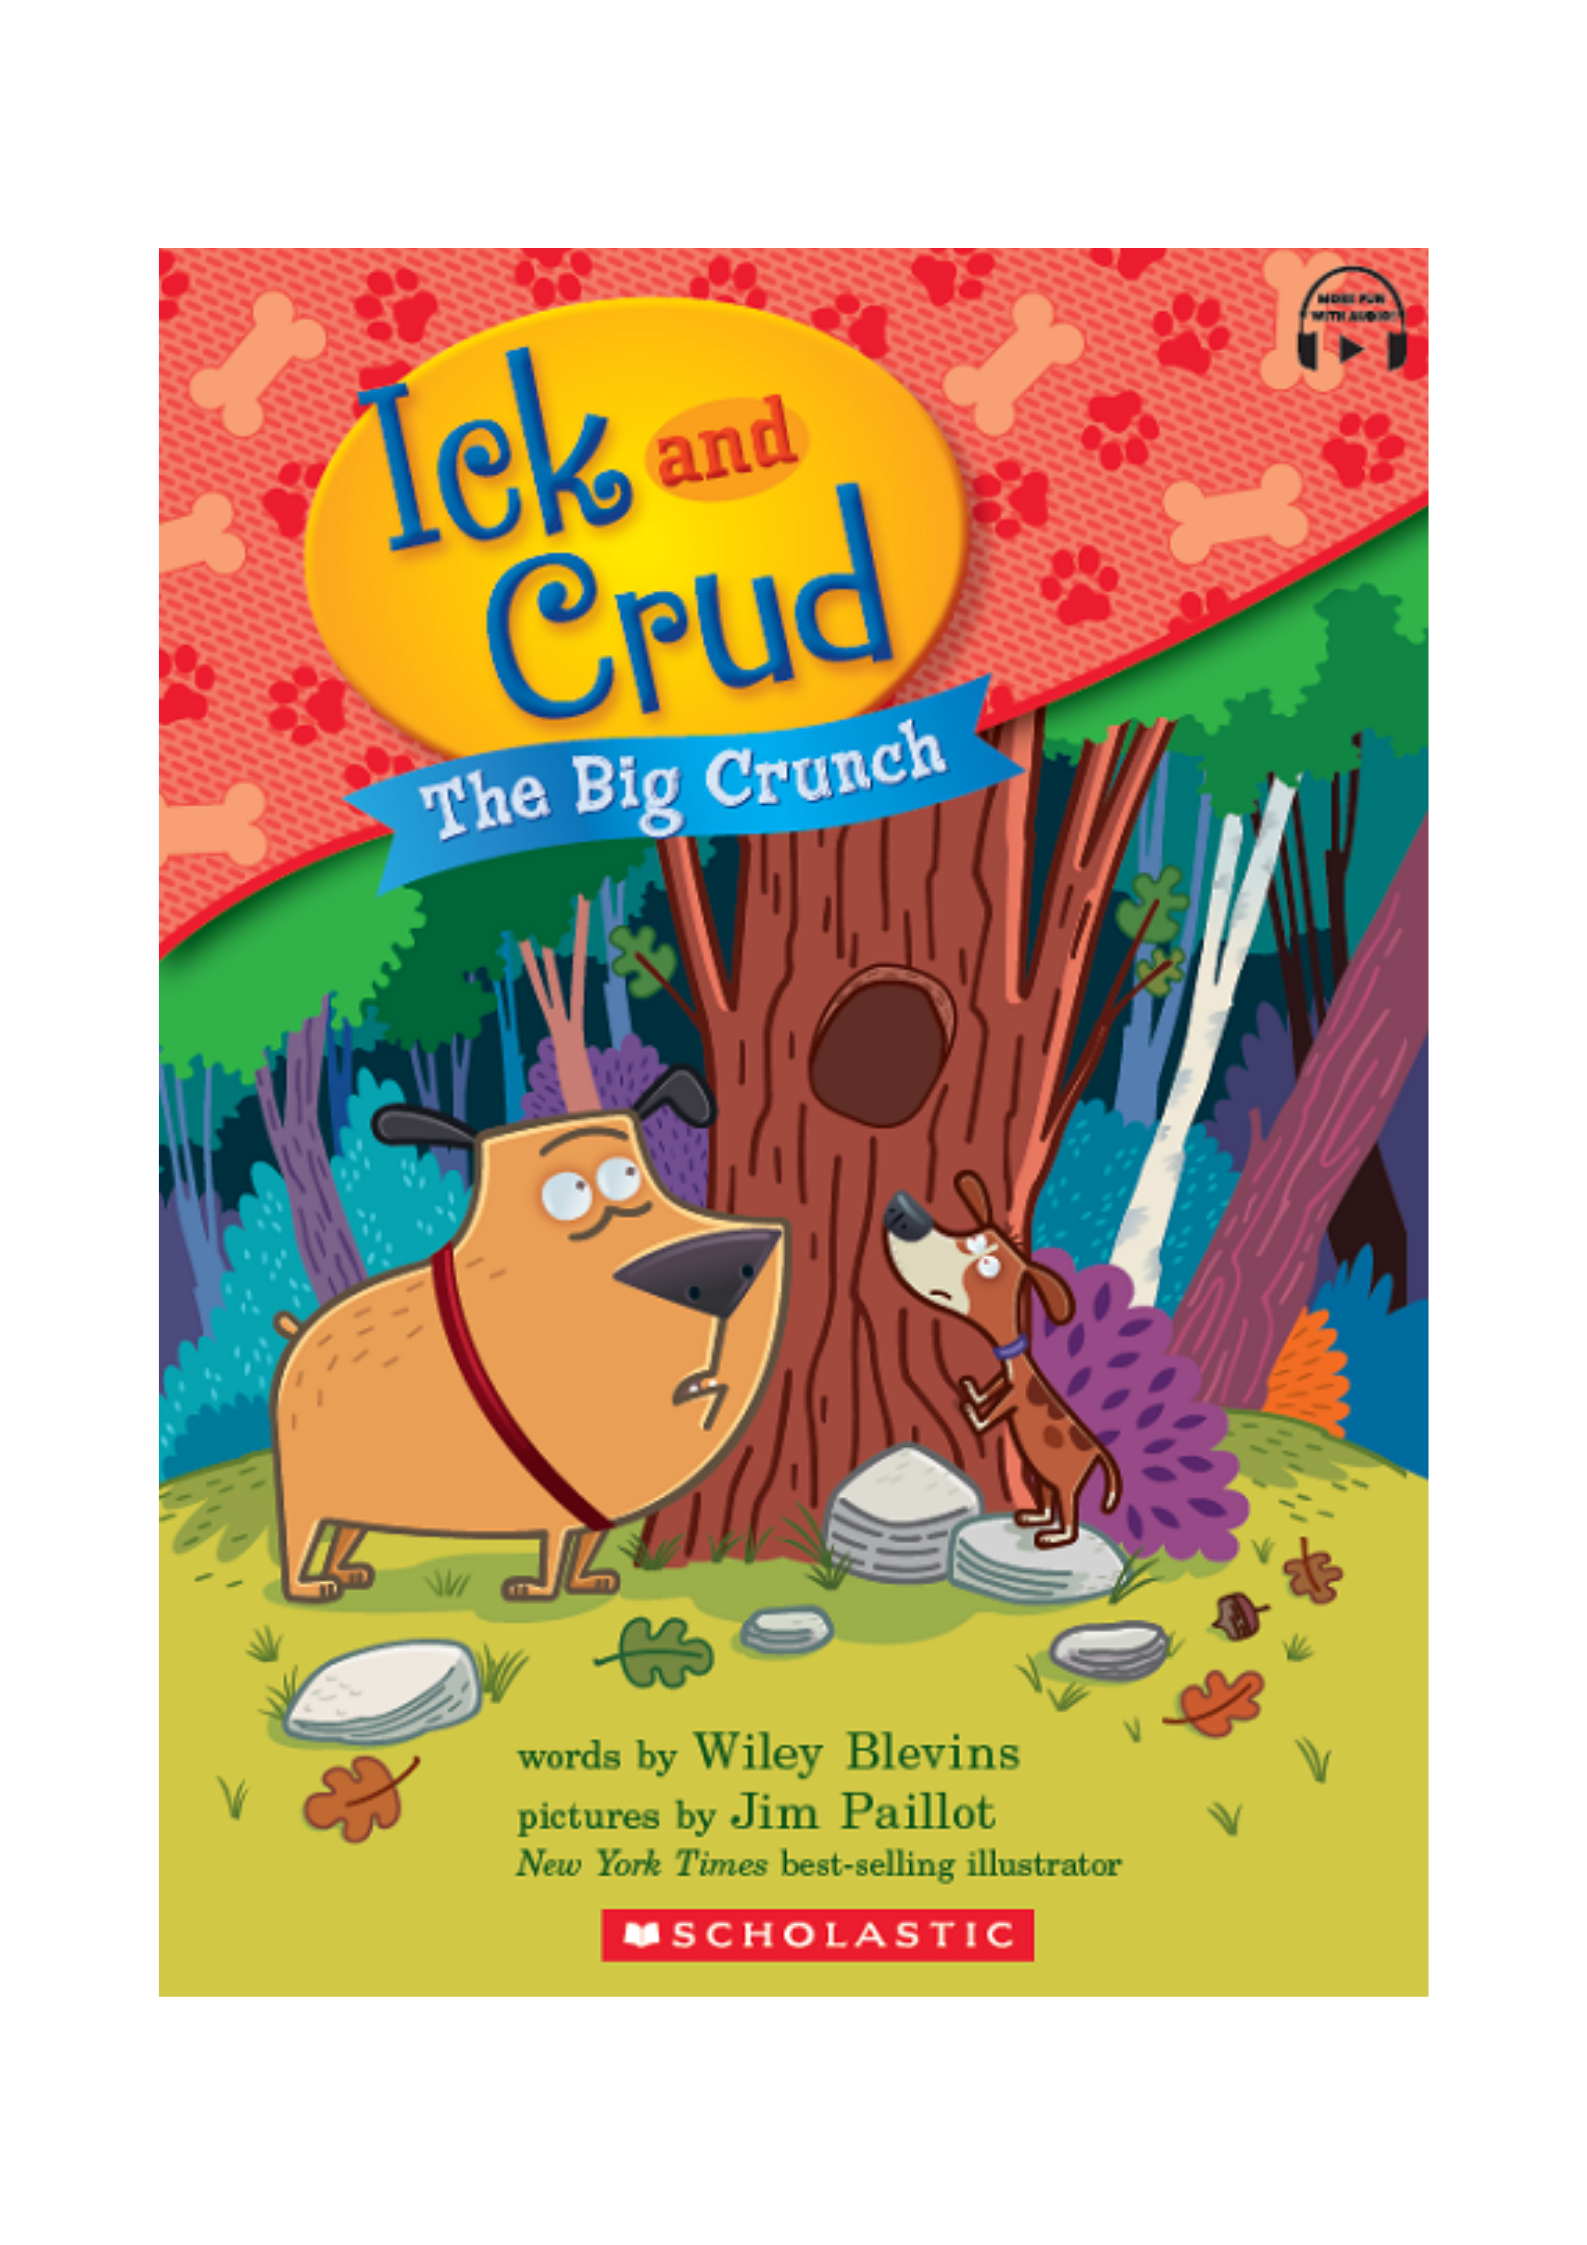 Ick & Crud: The Big Crunch